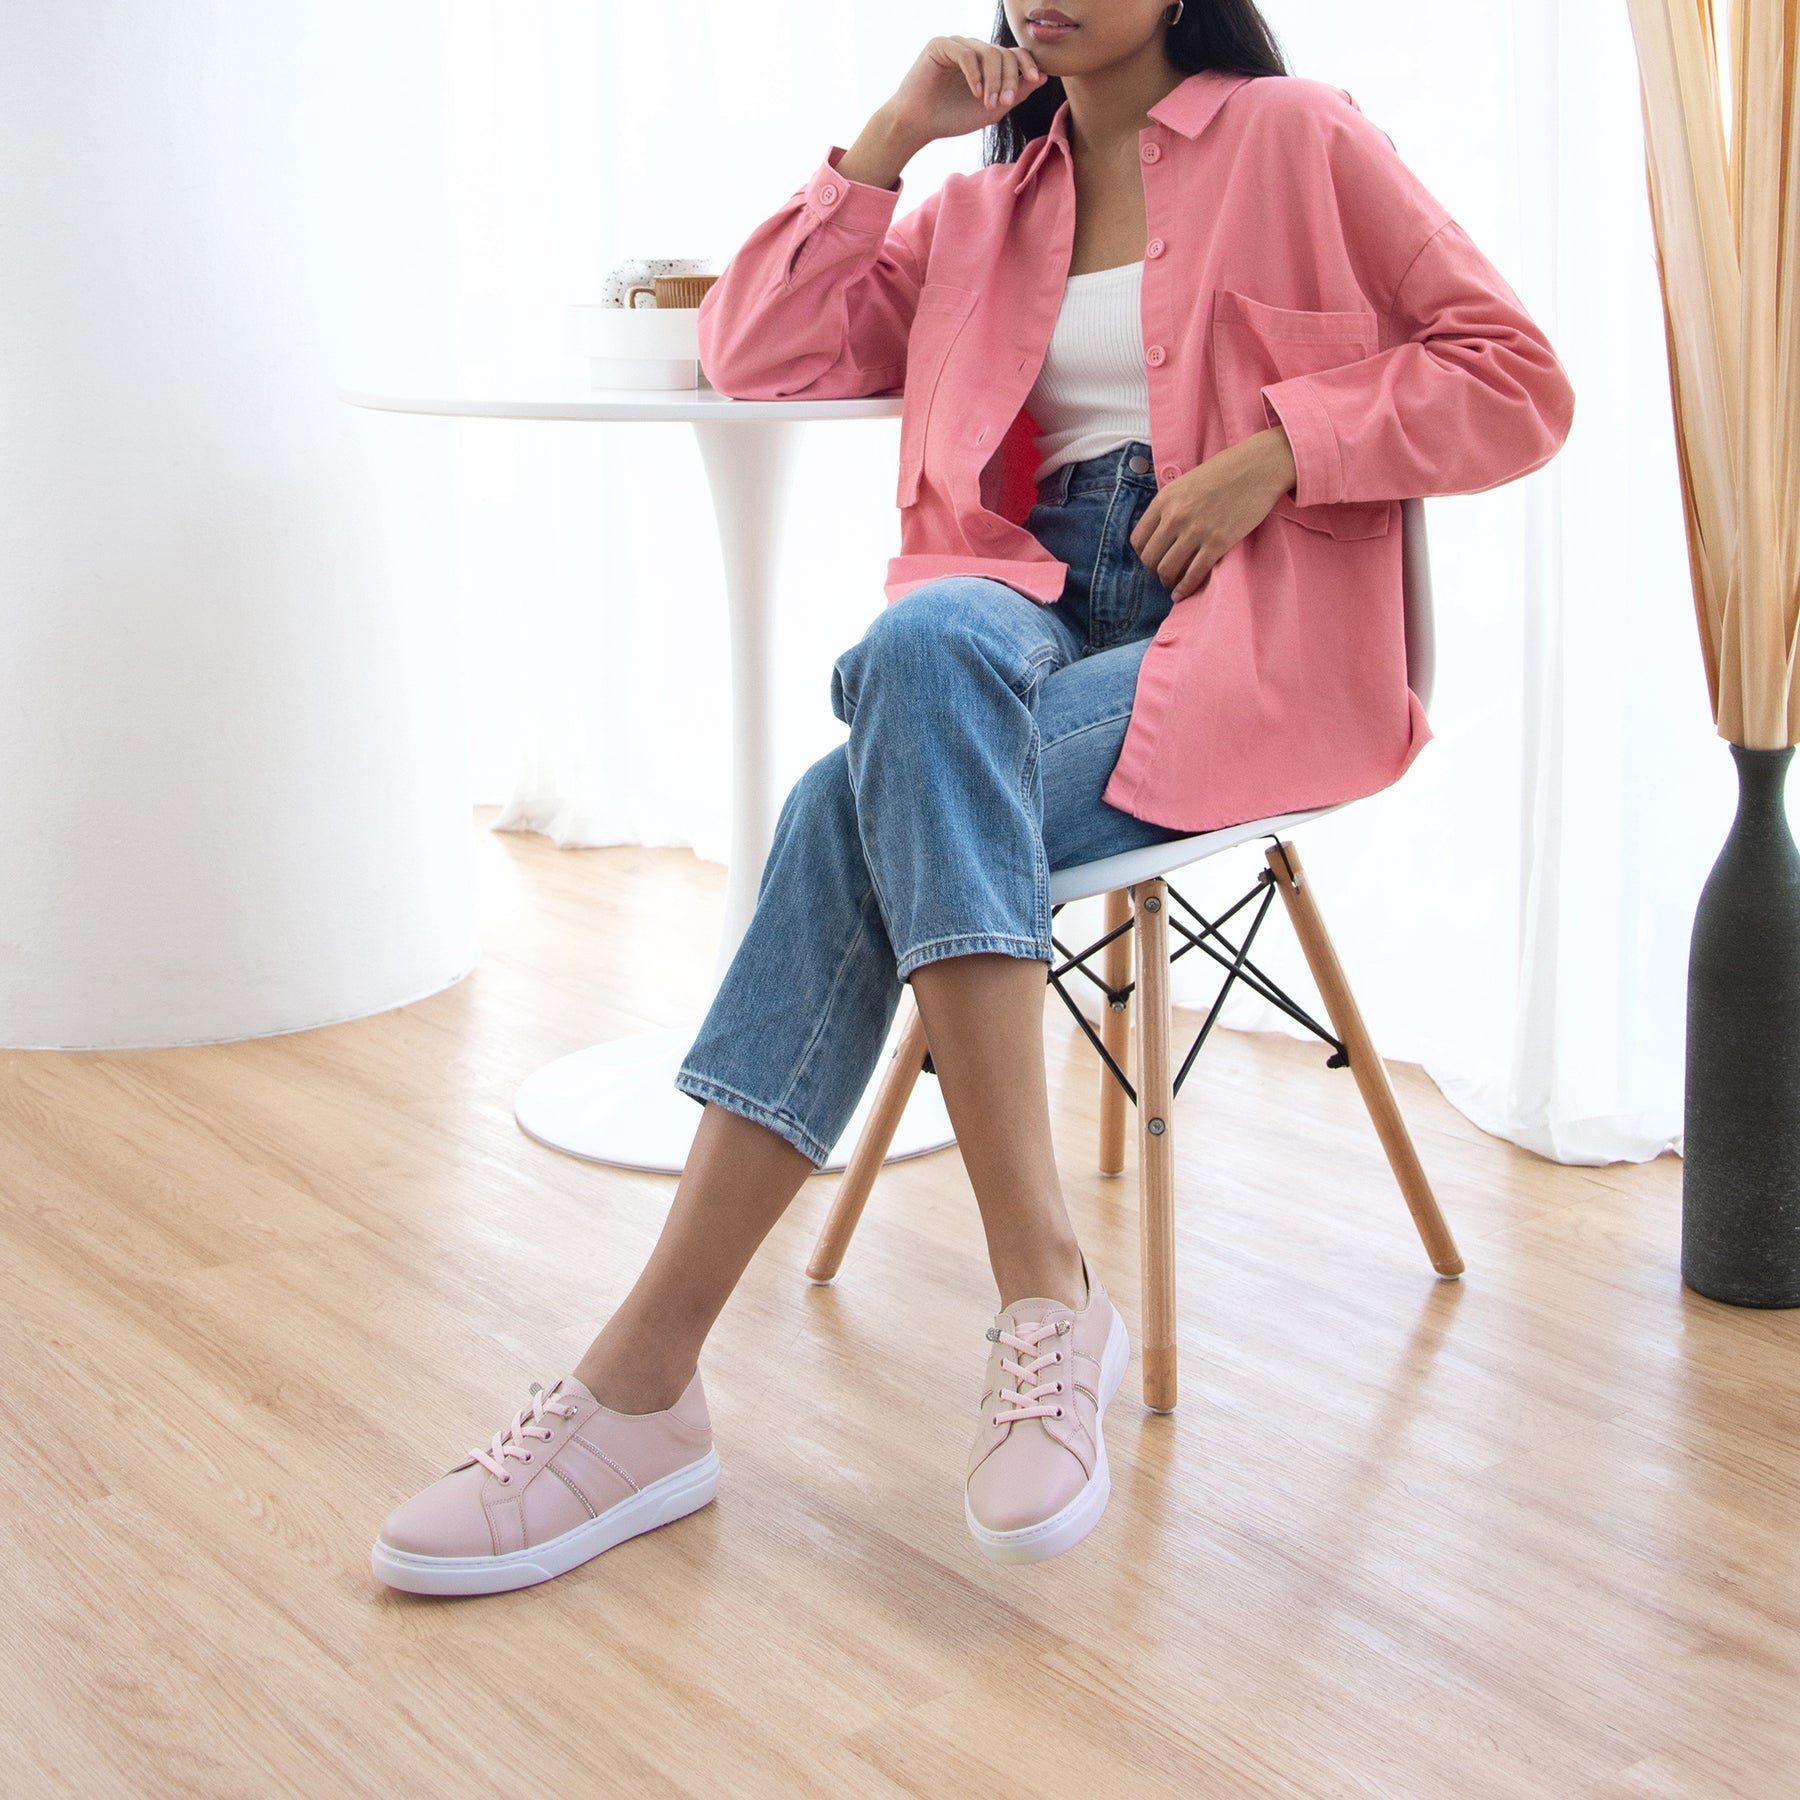 awesome Модные женские розовые кеды — Удачные образы и сочетания | Pink  sneakers outfit, Pink shoes outfit, Tennis clothes